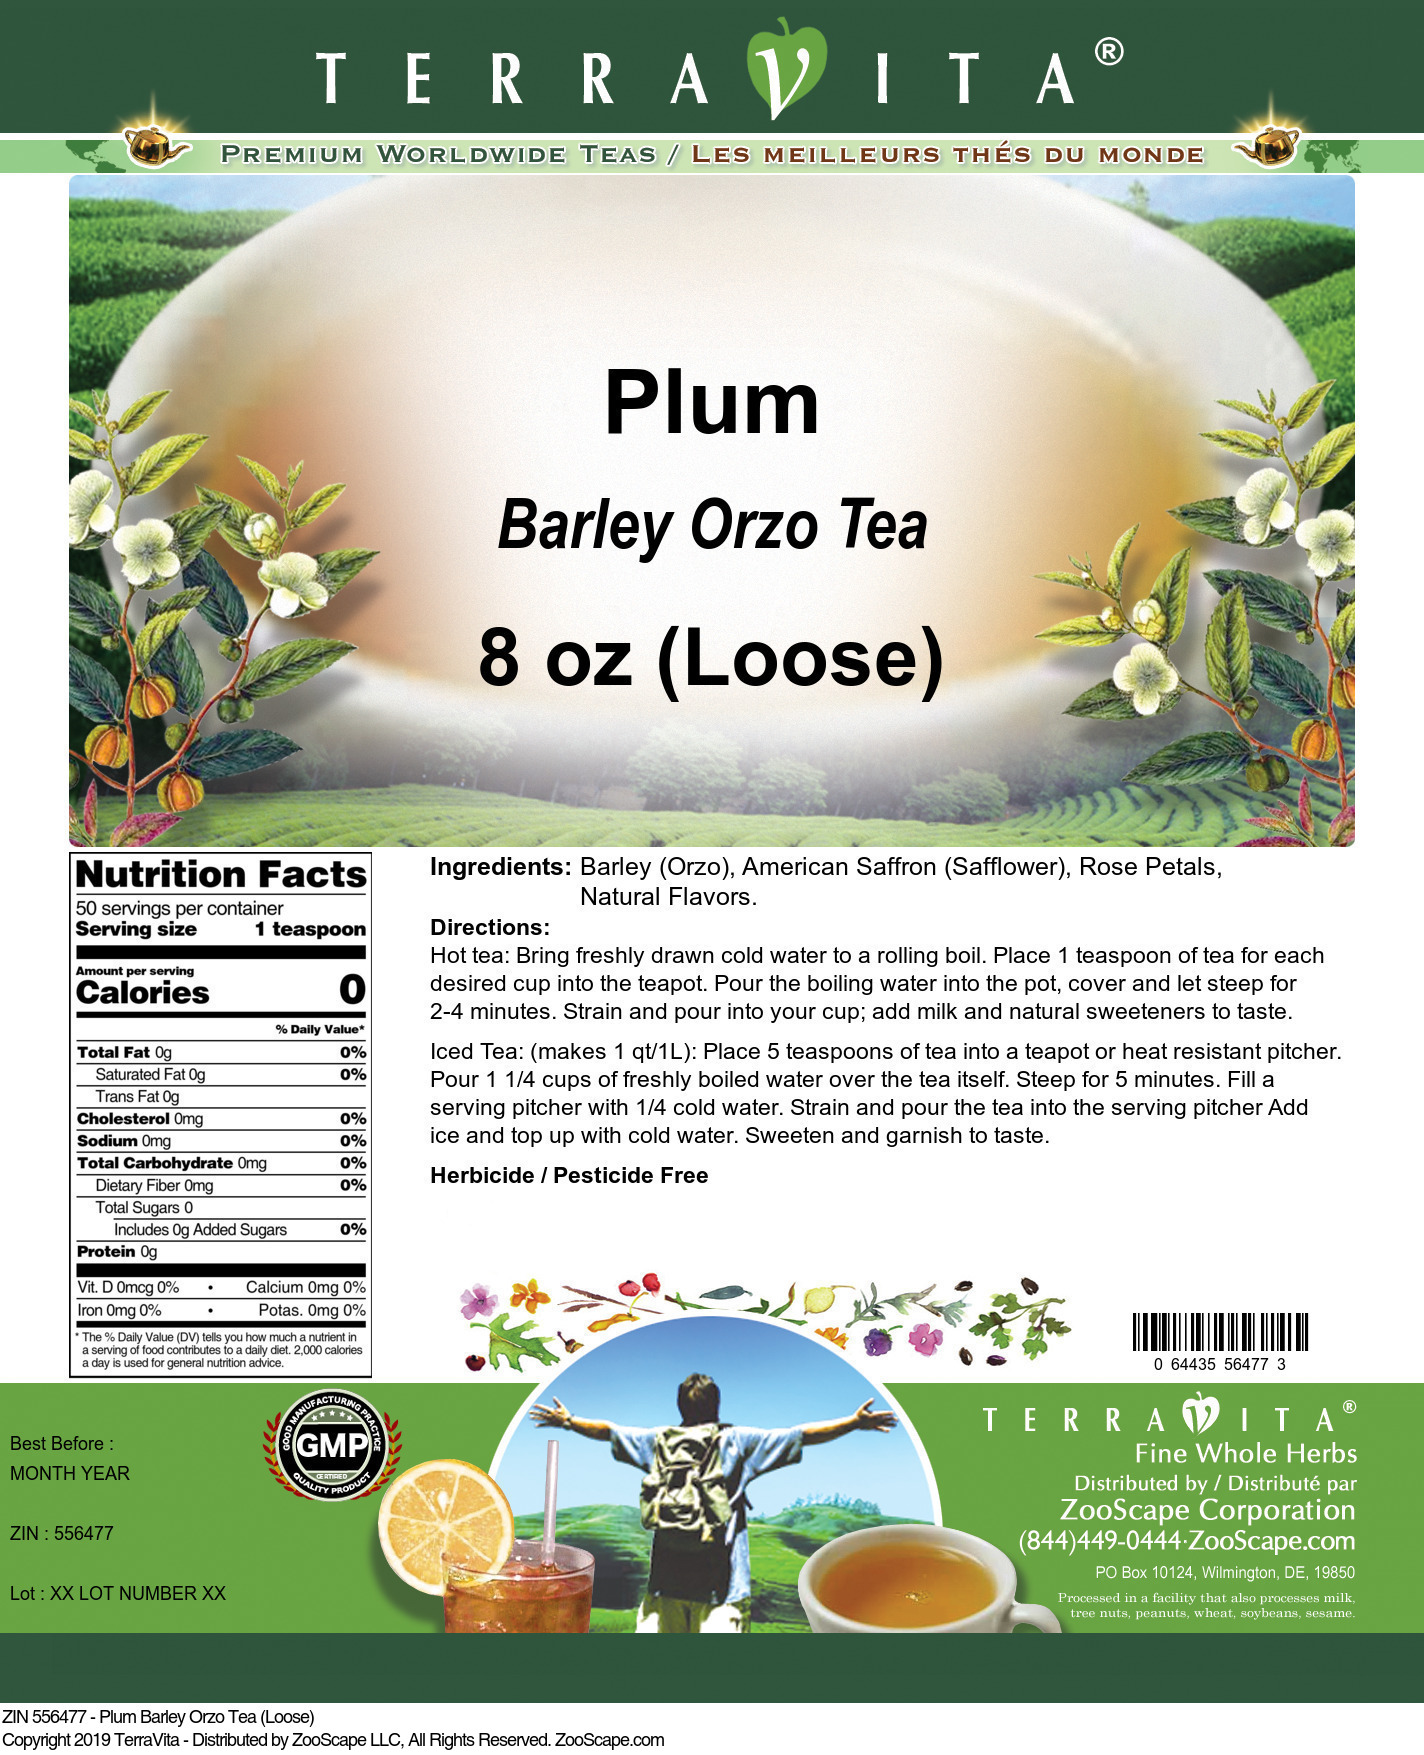 Plum Barley Orzo Tea (Loose) - Label